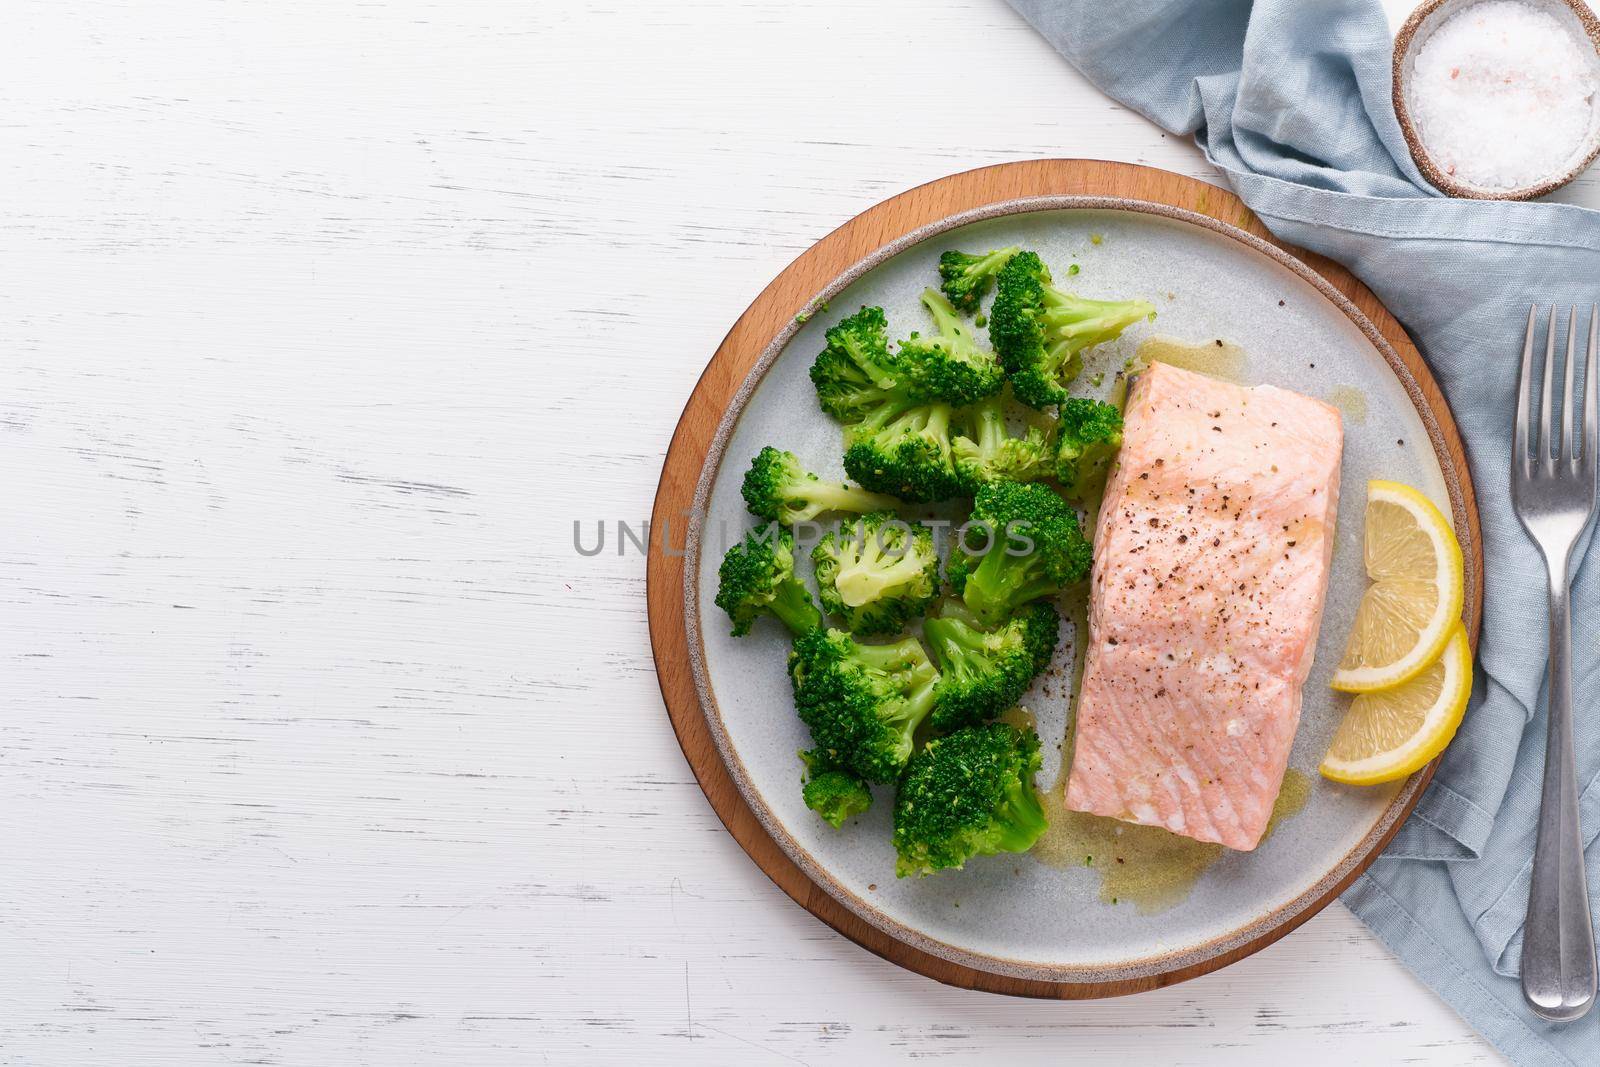 Steam salmon, broccoli, paleo, keto, lshf or dash diet. Mediterranean food. Clean eating, balanced by NataBene